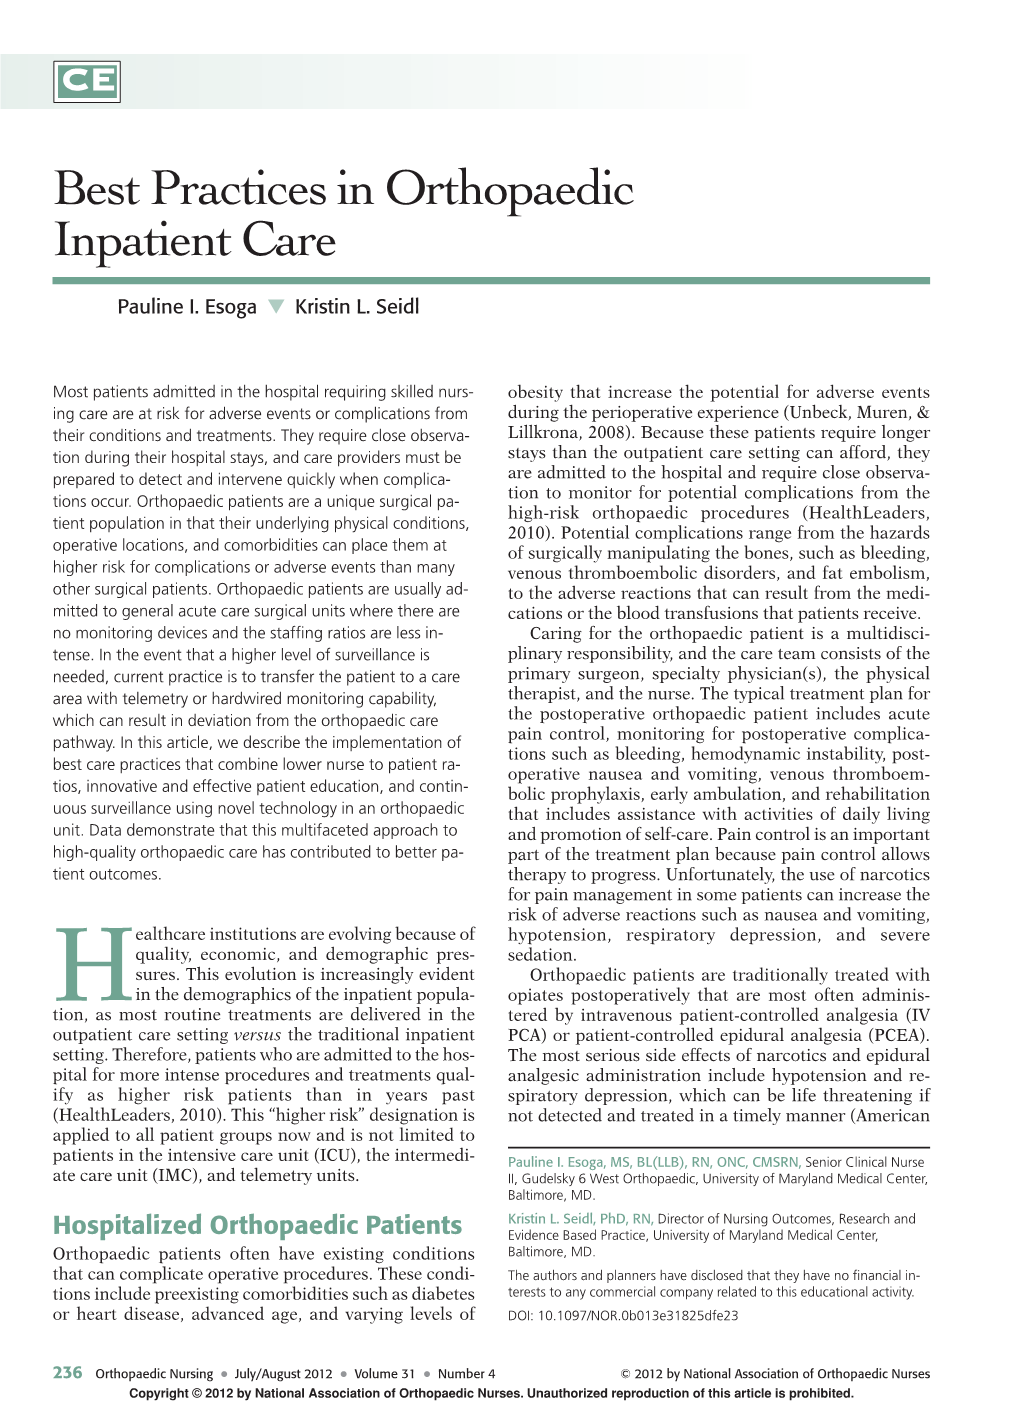 Best Practices in Orthopaedic Inpatient Care